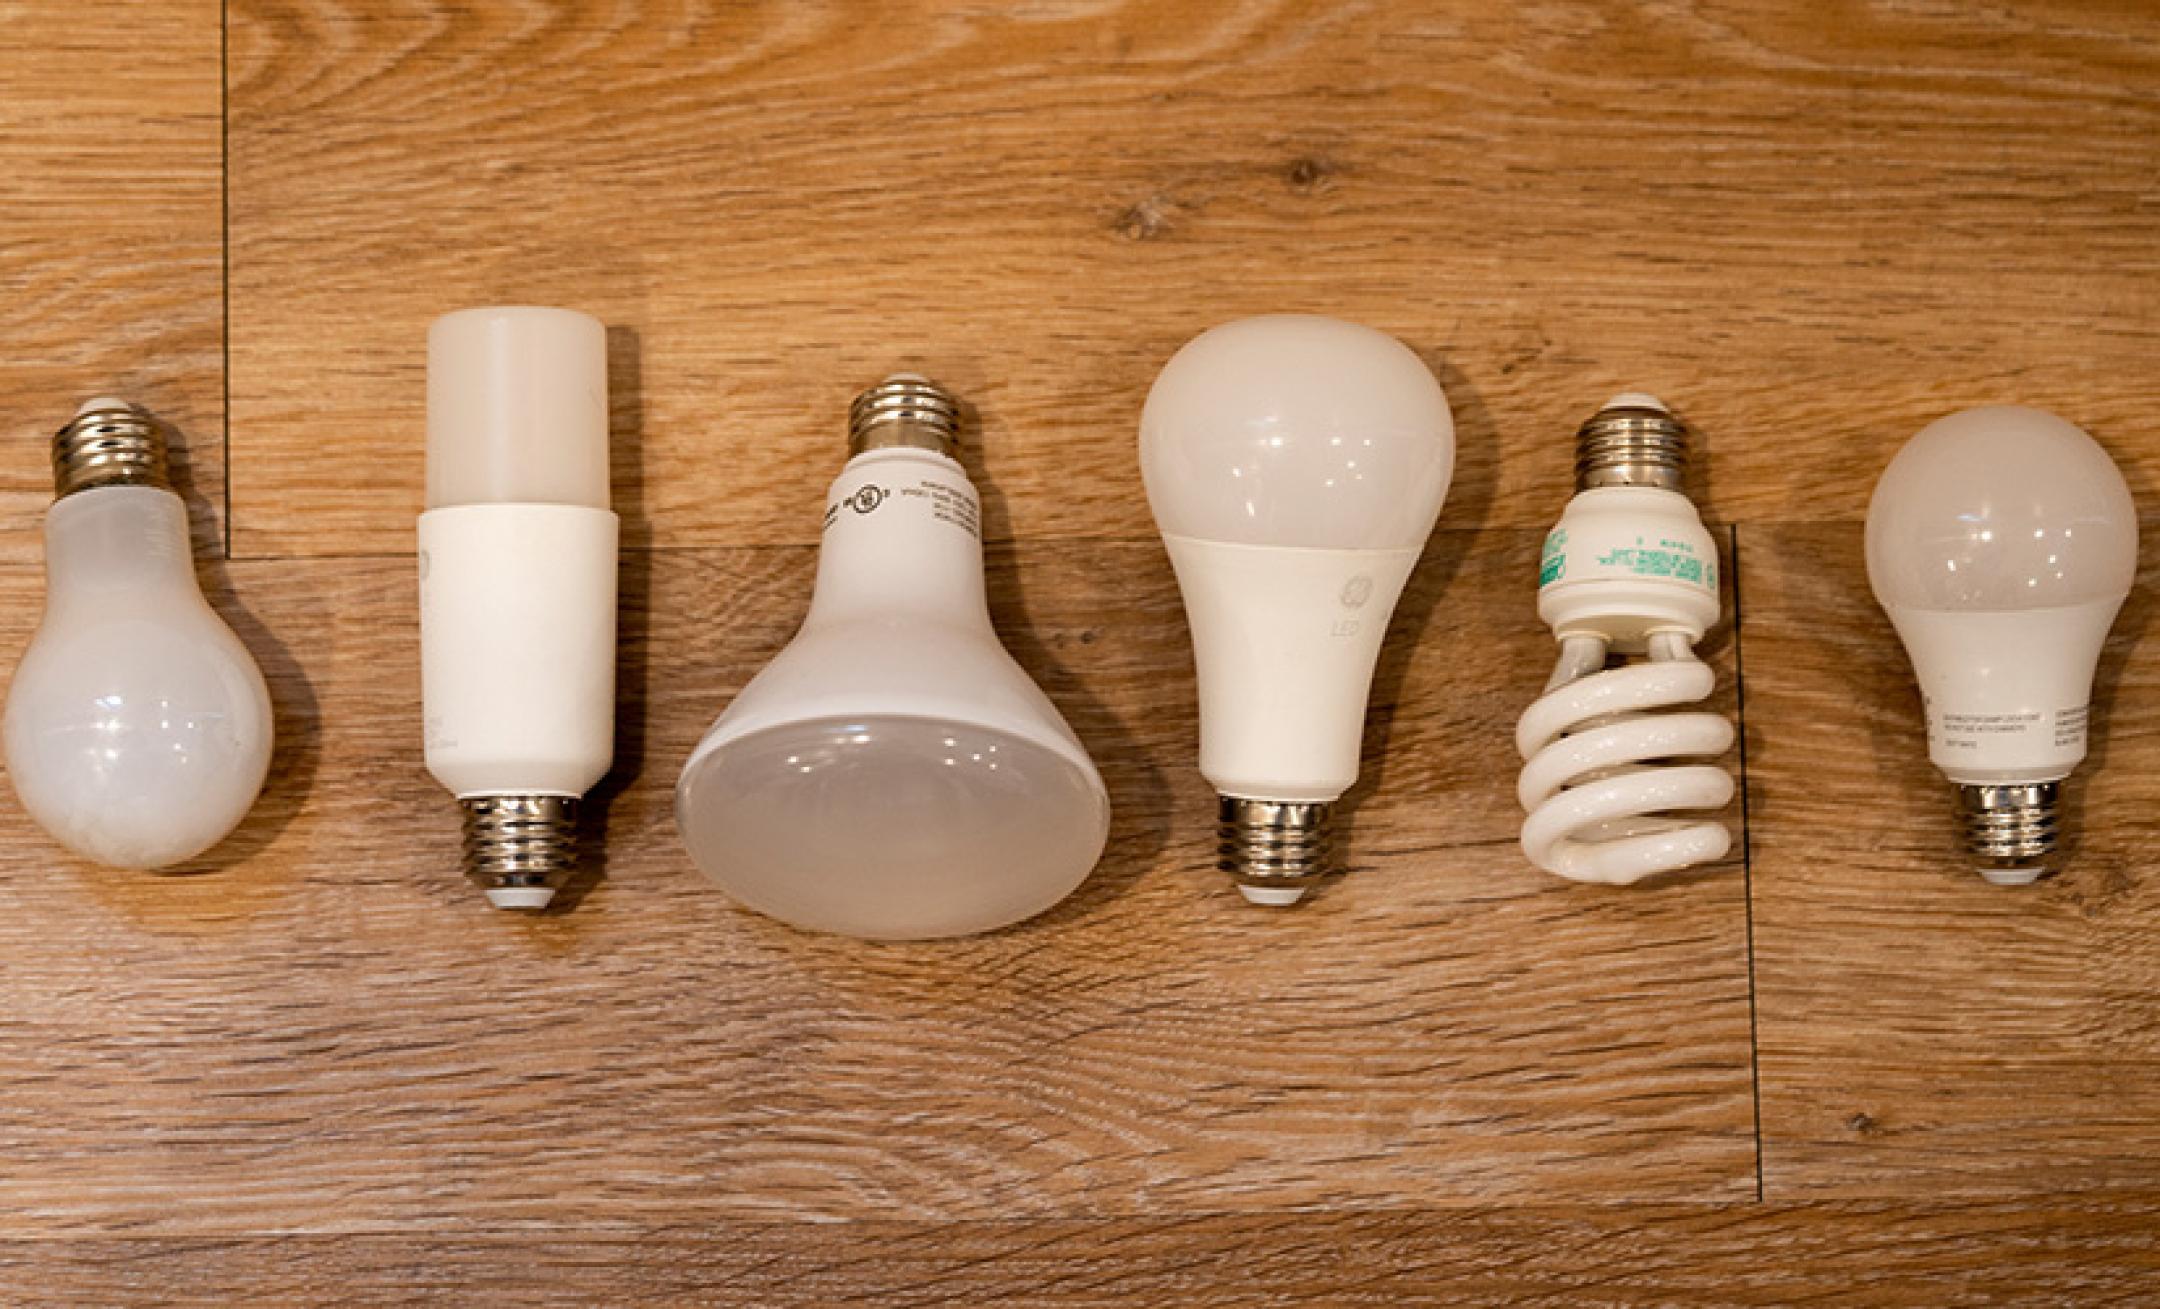 How to Choose Light Bulbs